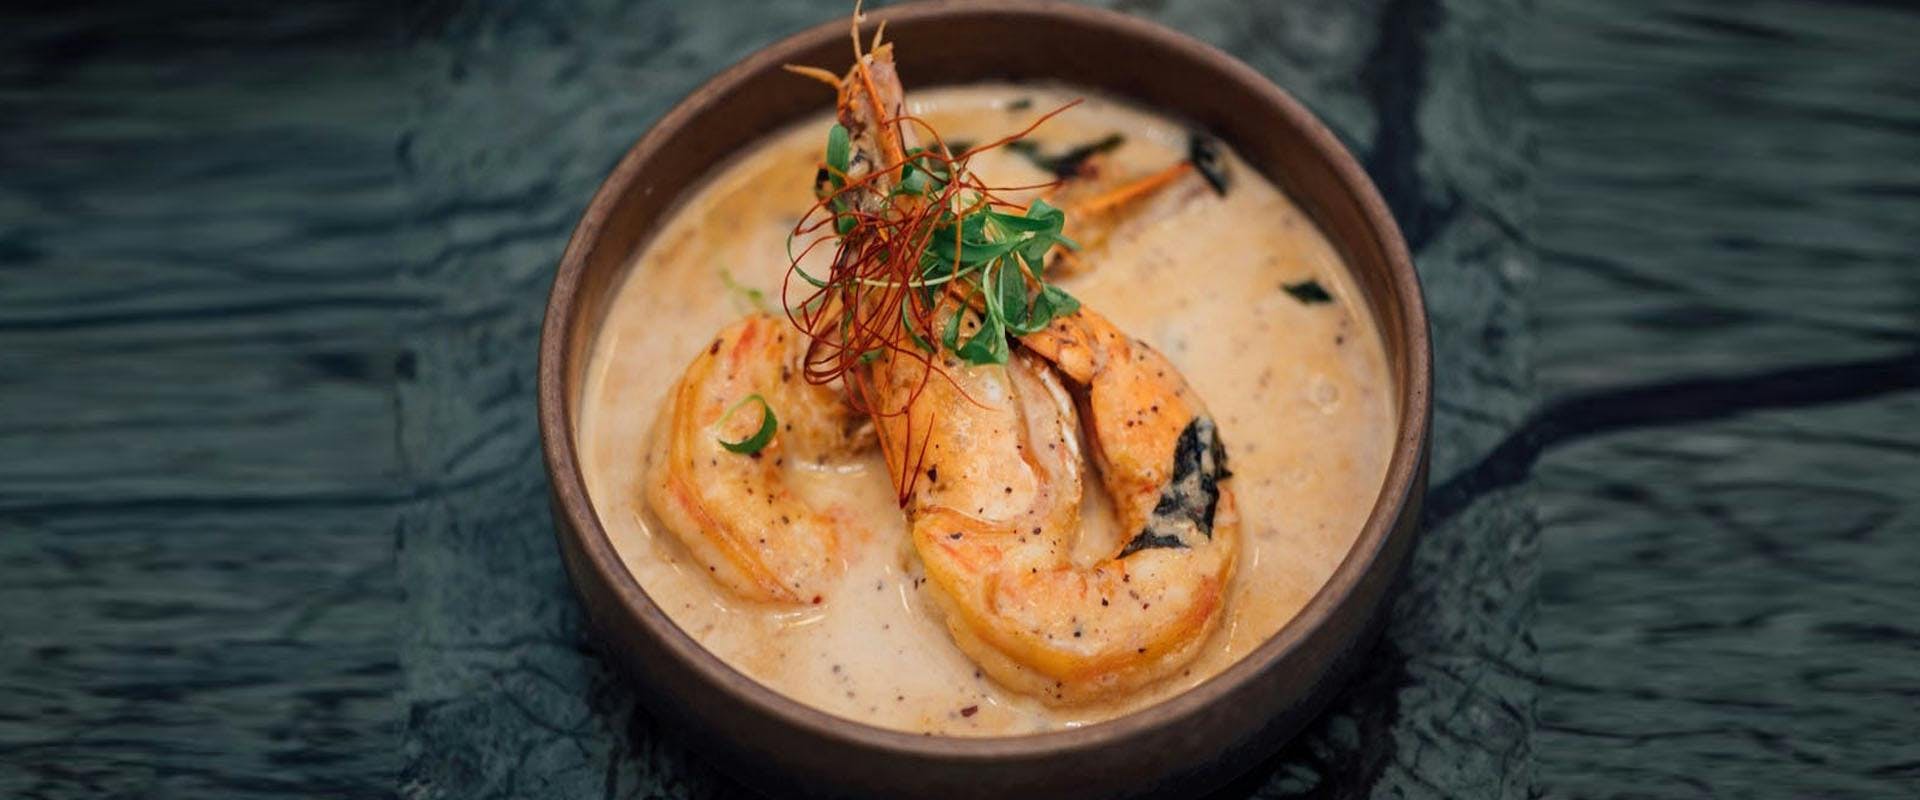 dish meal food bowl soup bowl curry soup stew shrimp animal